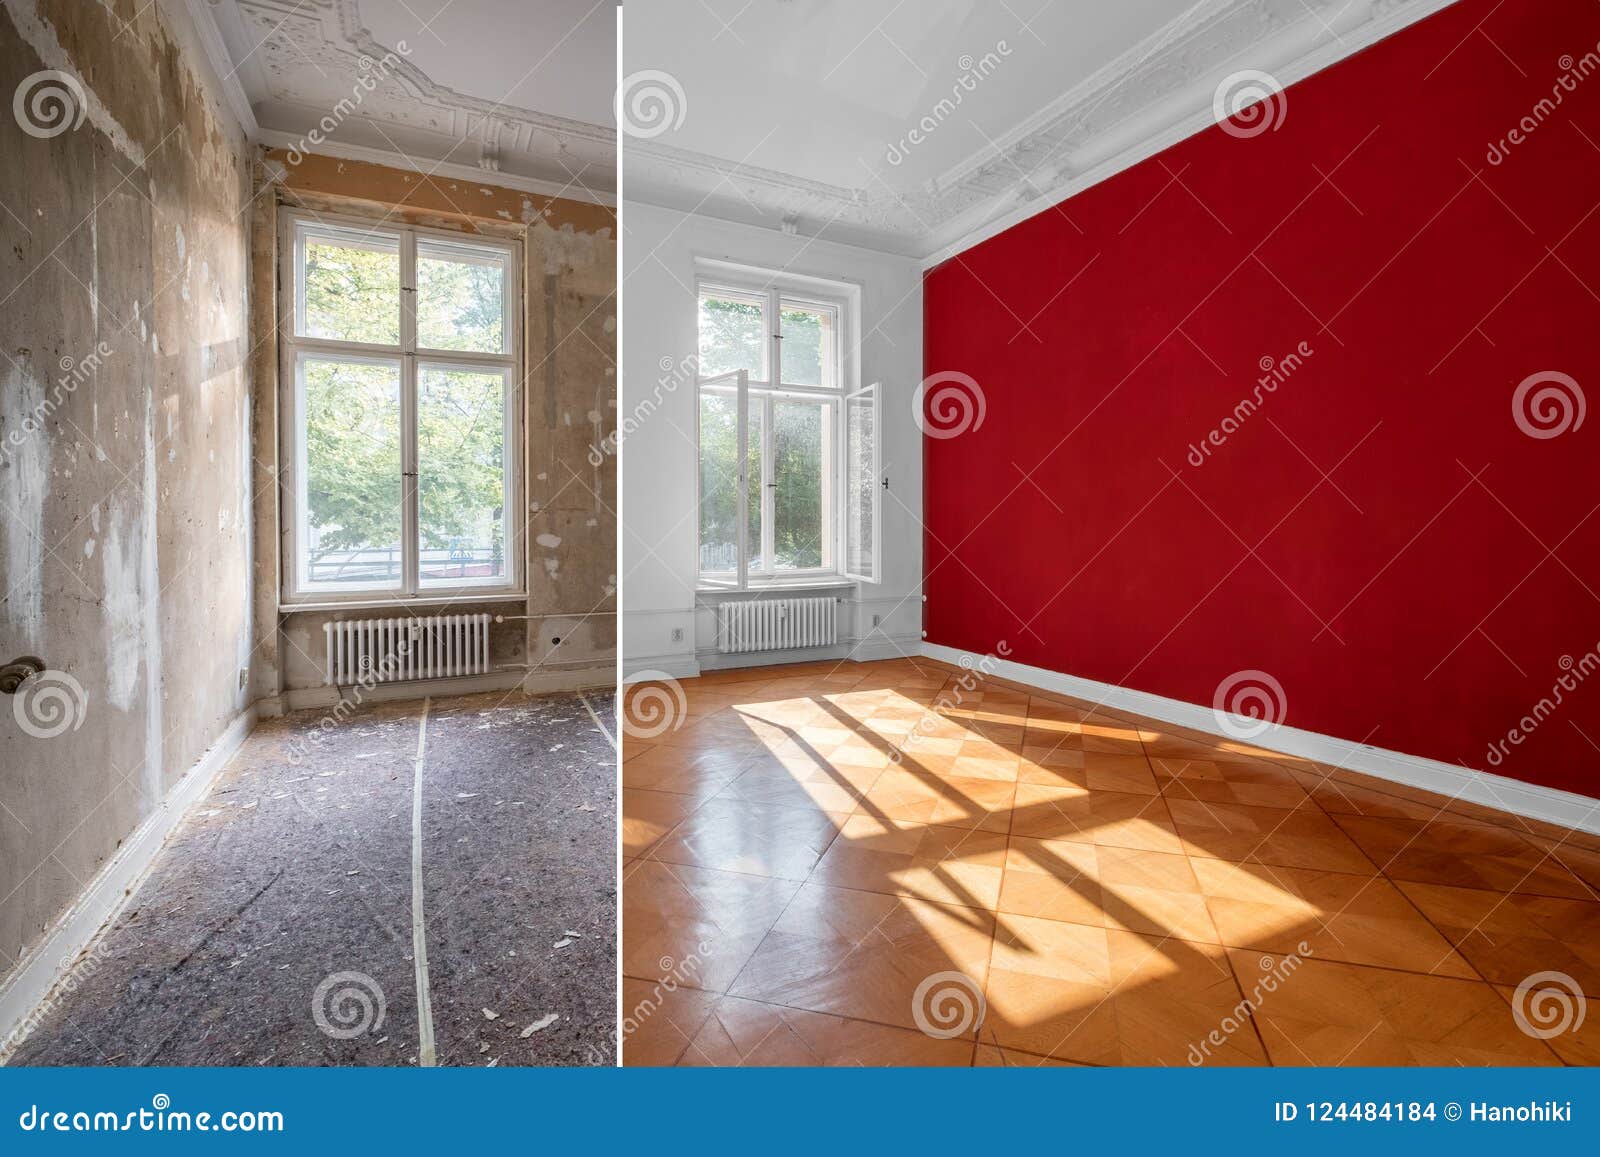 home renovation - old apartment room during restoration or refurbishment